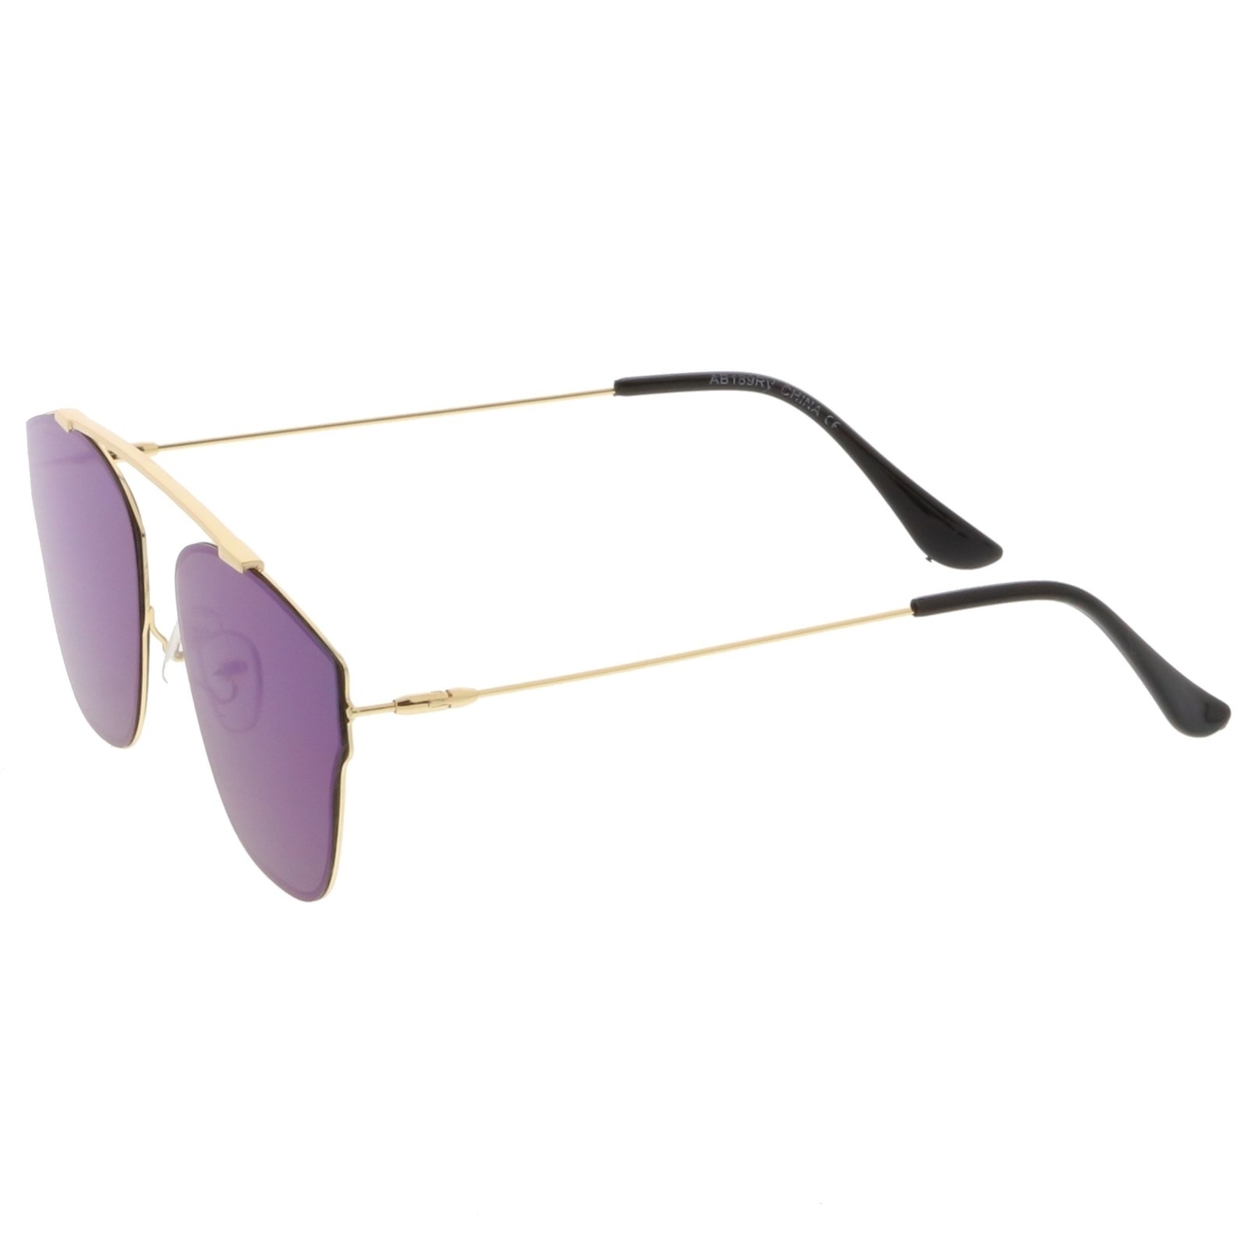 Modern Ultra Slim Metal Curved Crossbar Colored Mirror Flat Lens Pantos Sunglasses 57mm - Gold / Blue Mirror